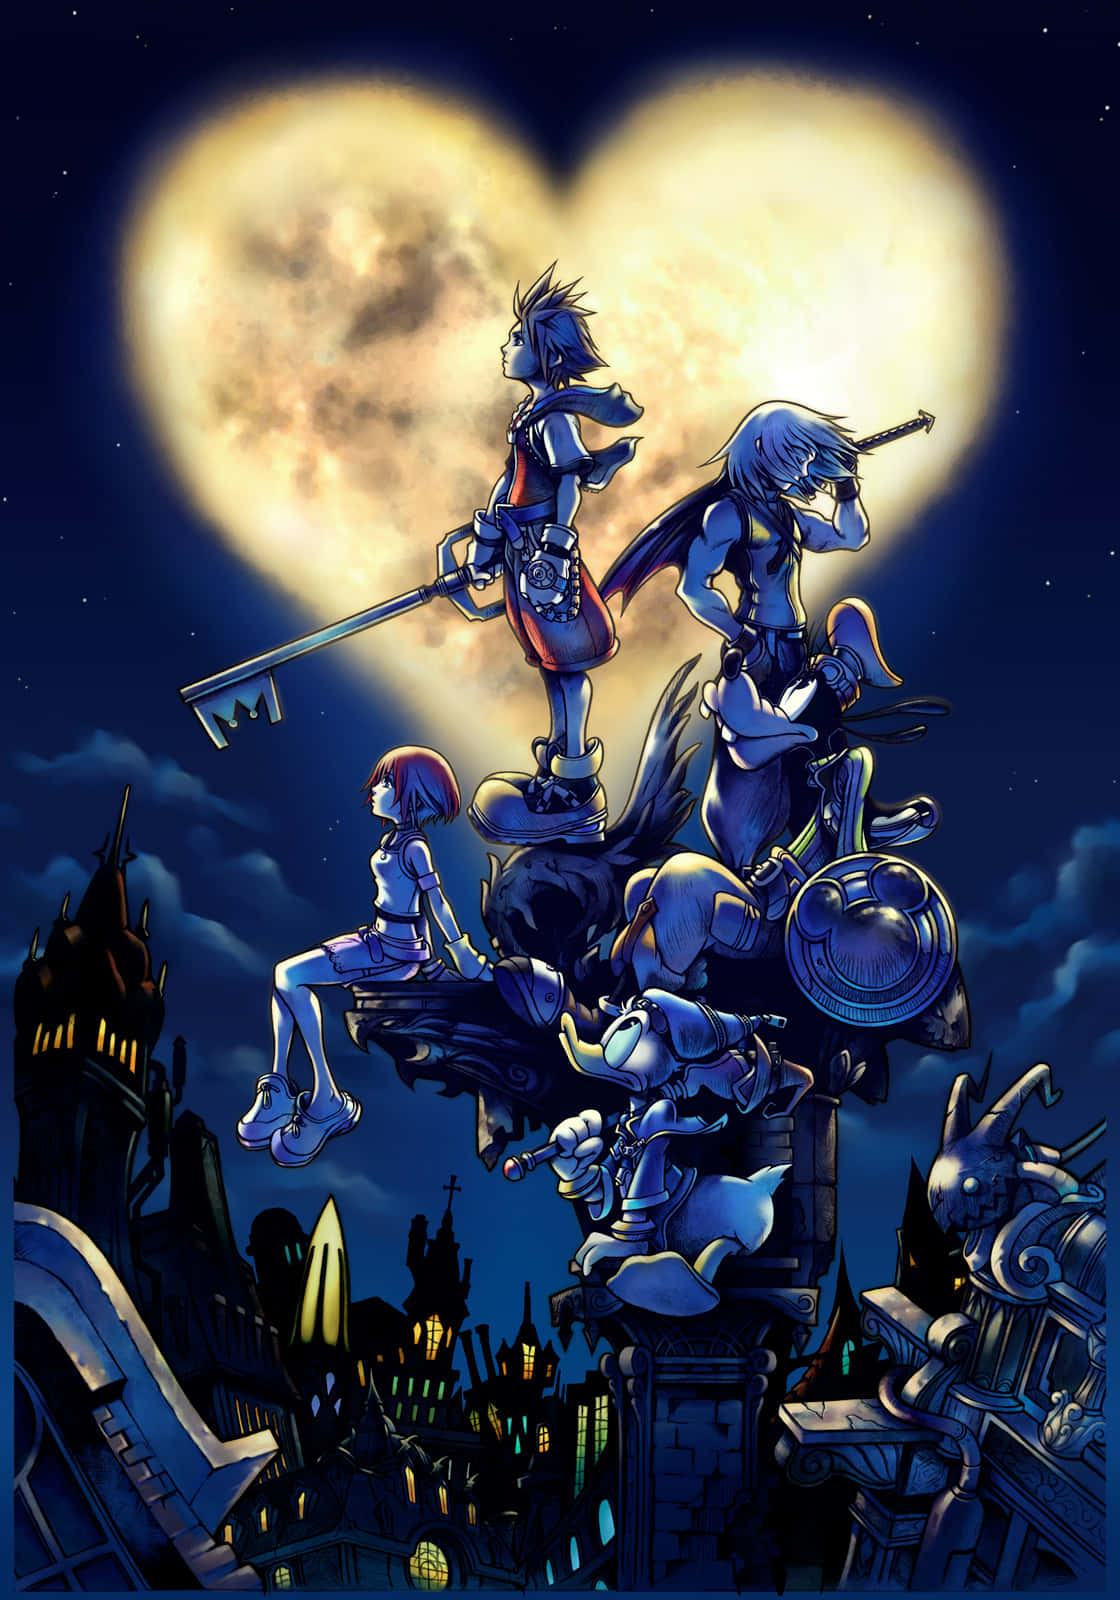 Kairi from Kingdom Hearts Wielding her Destiny's Embrace Keyblade Wallpaper